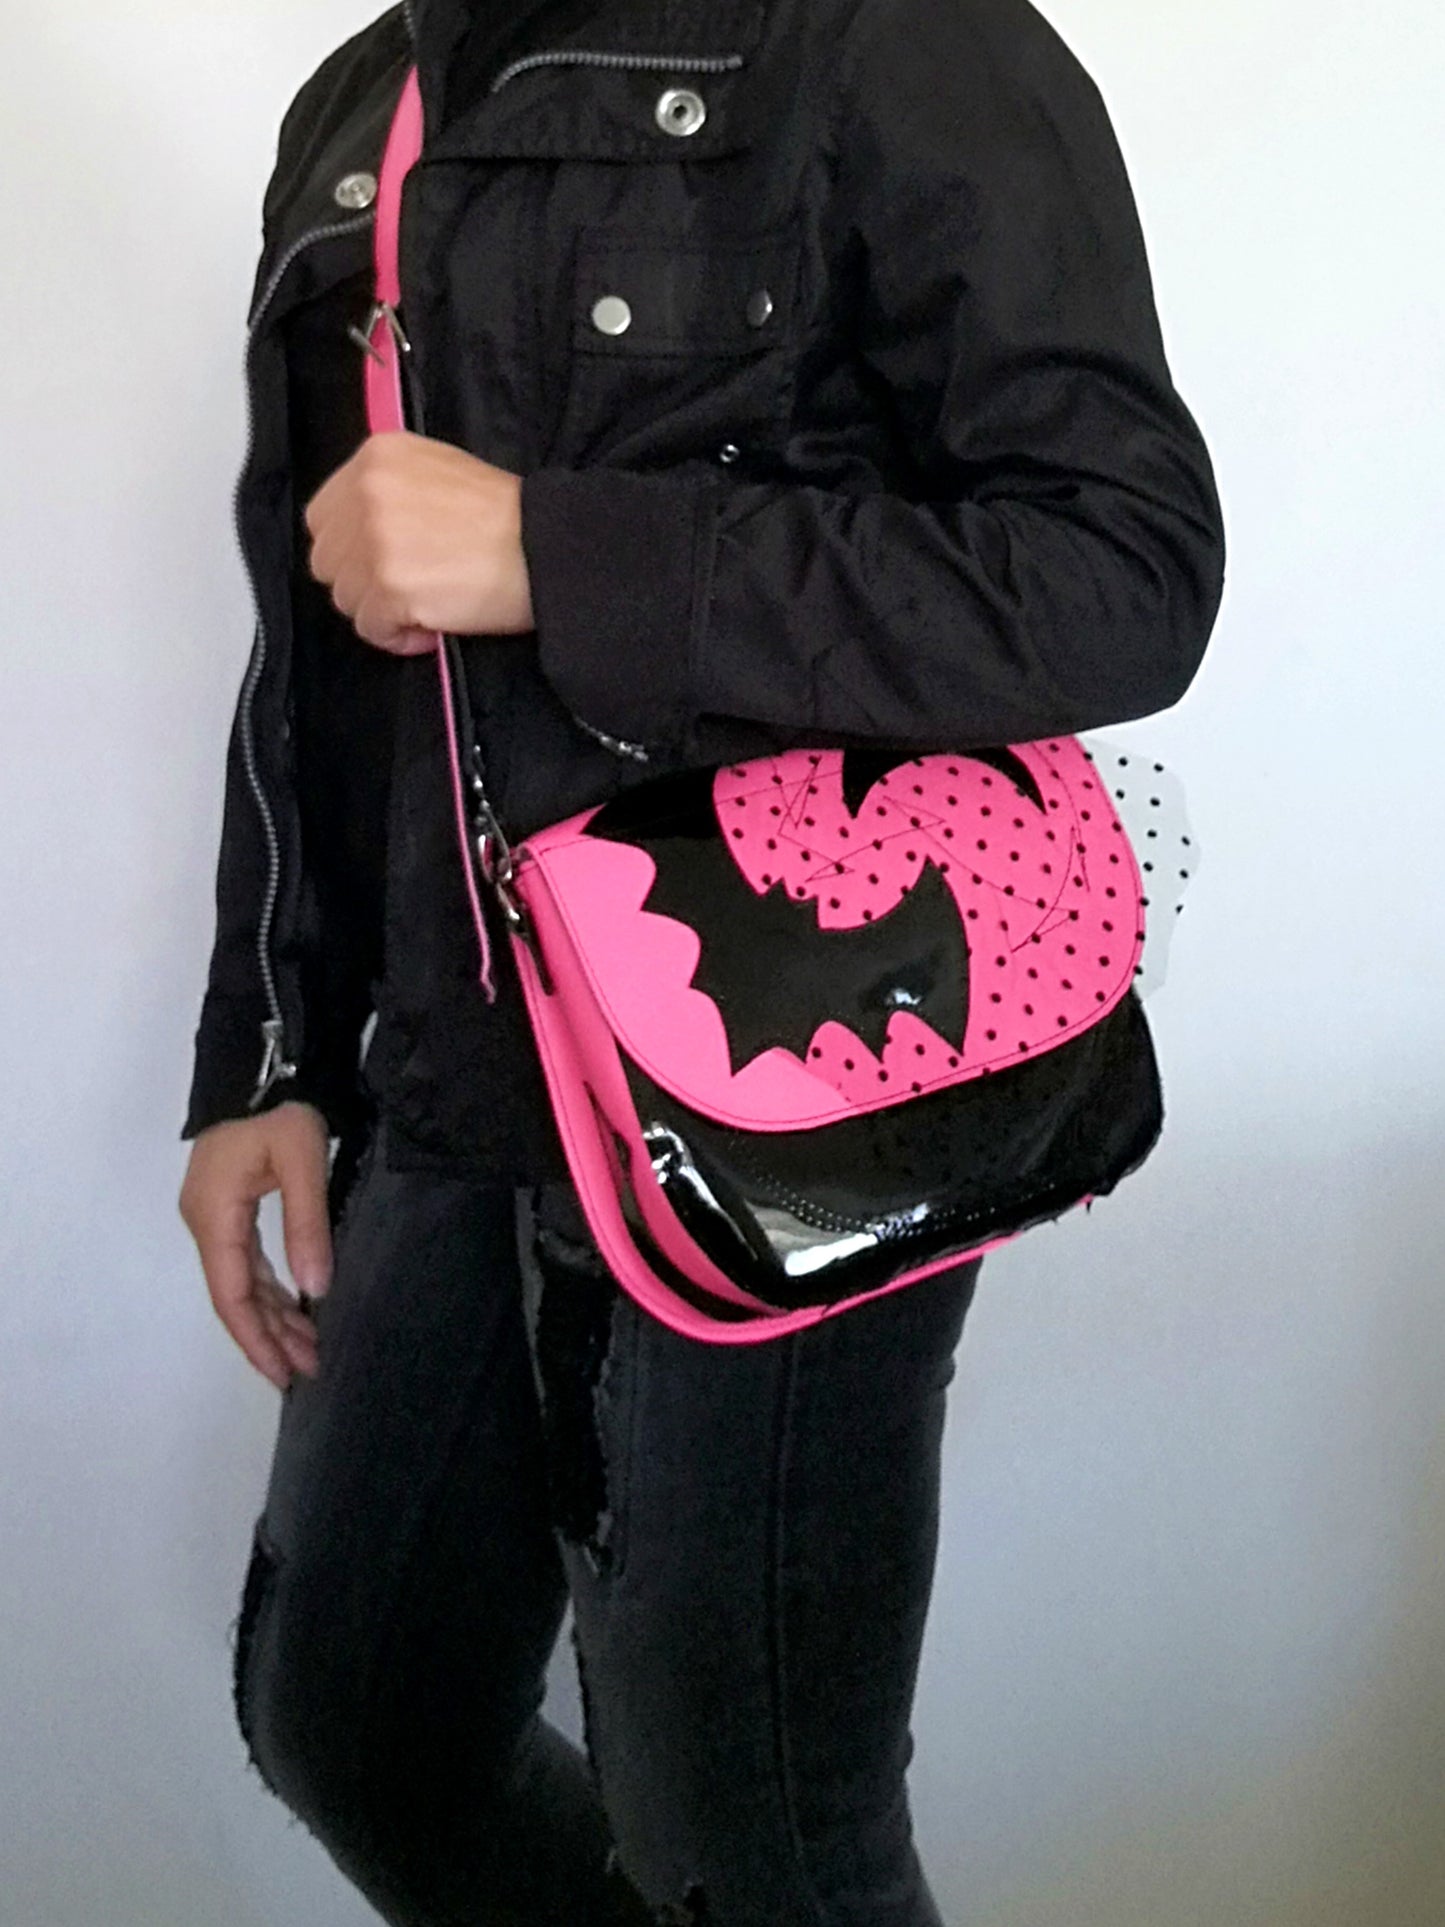 Pink Leather Saddle Bag Small Leather Crossbody Purse Bag